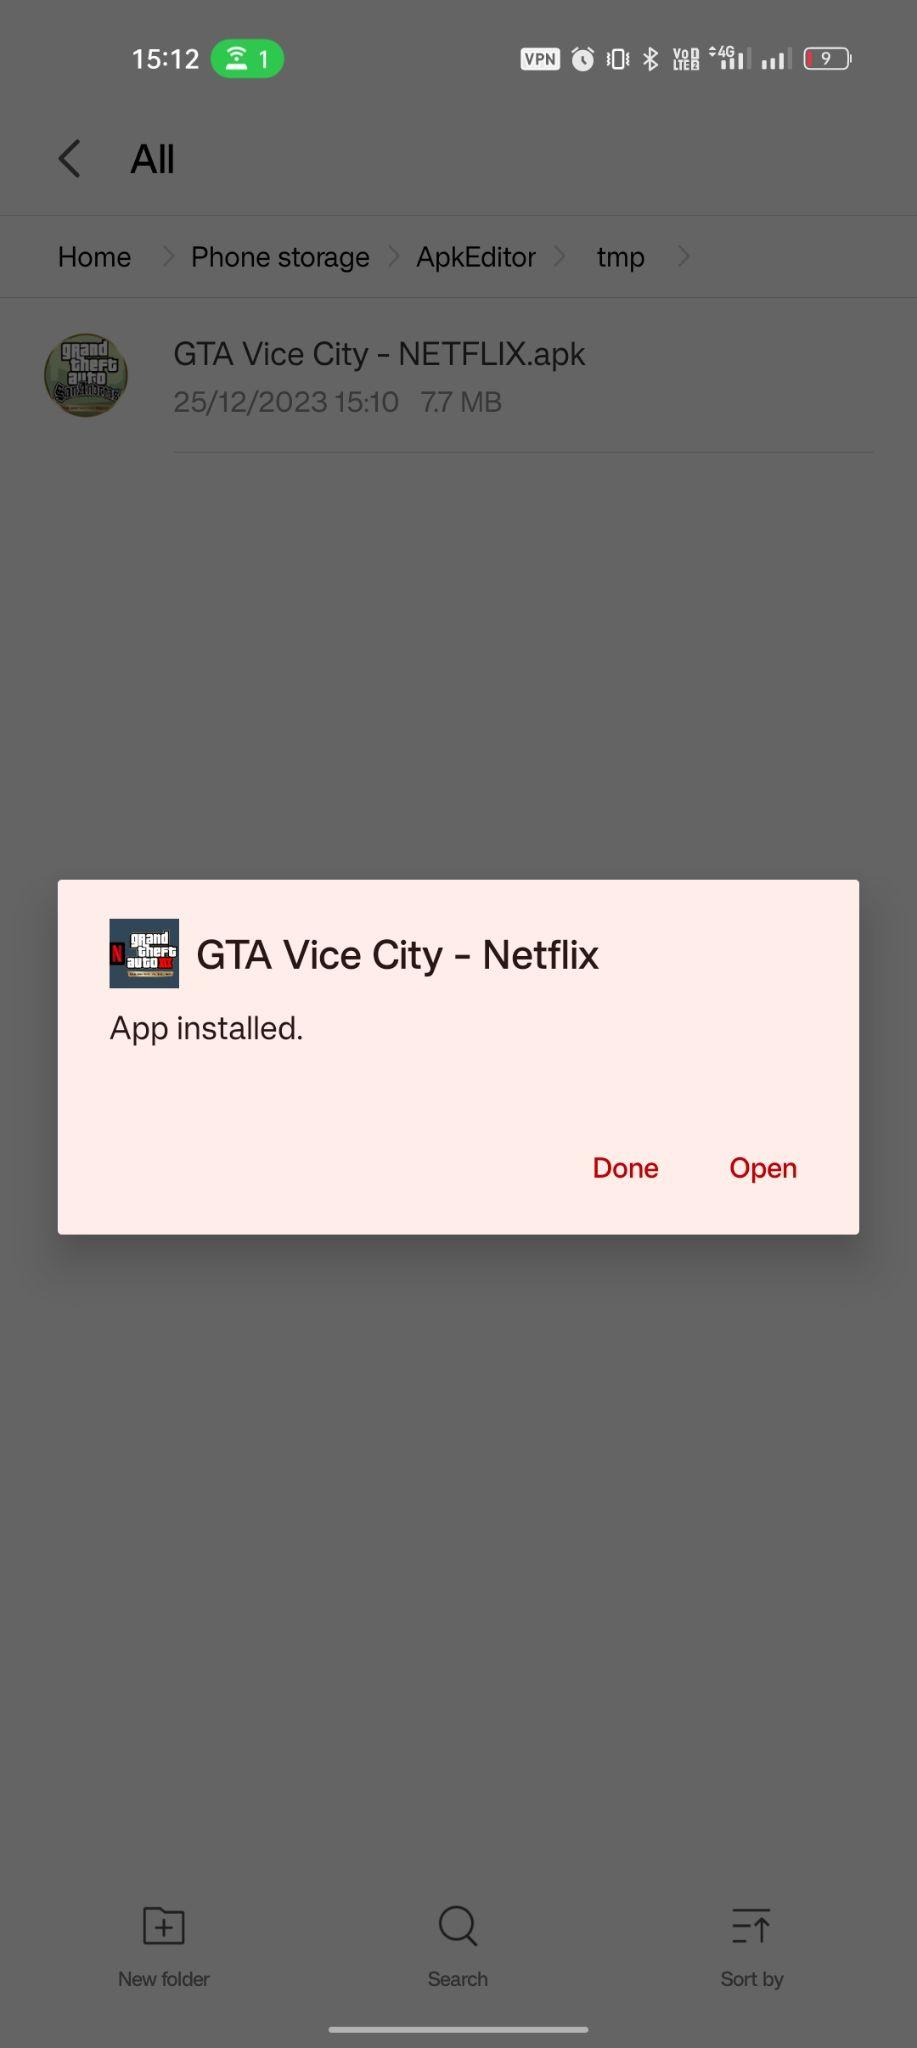 GTA: Vice City - Netflix apk instalado